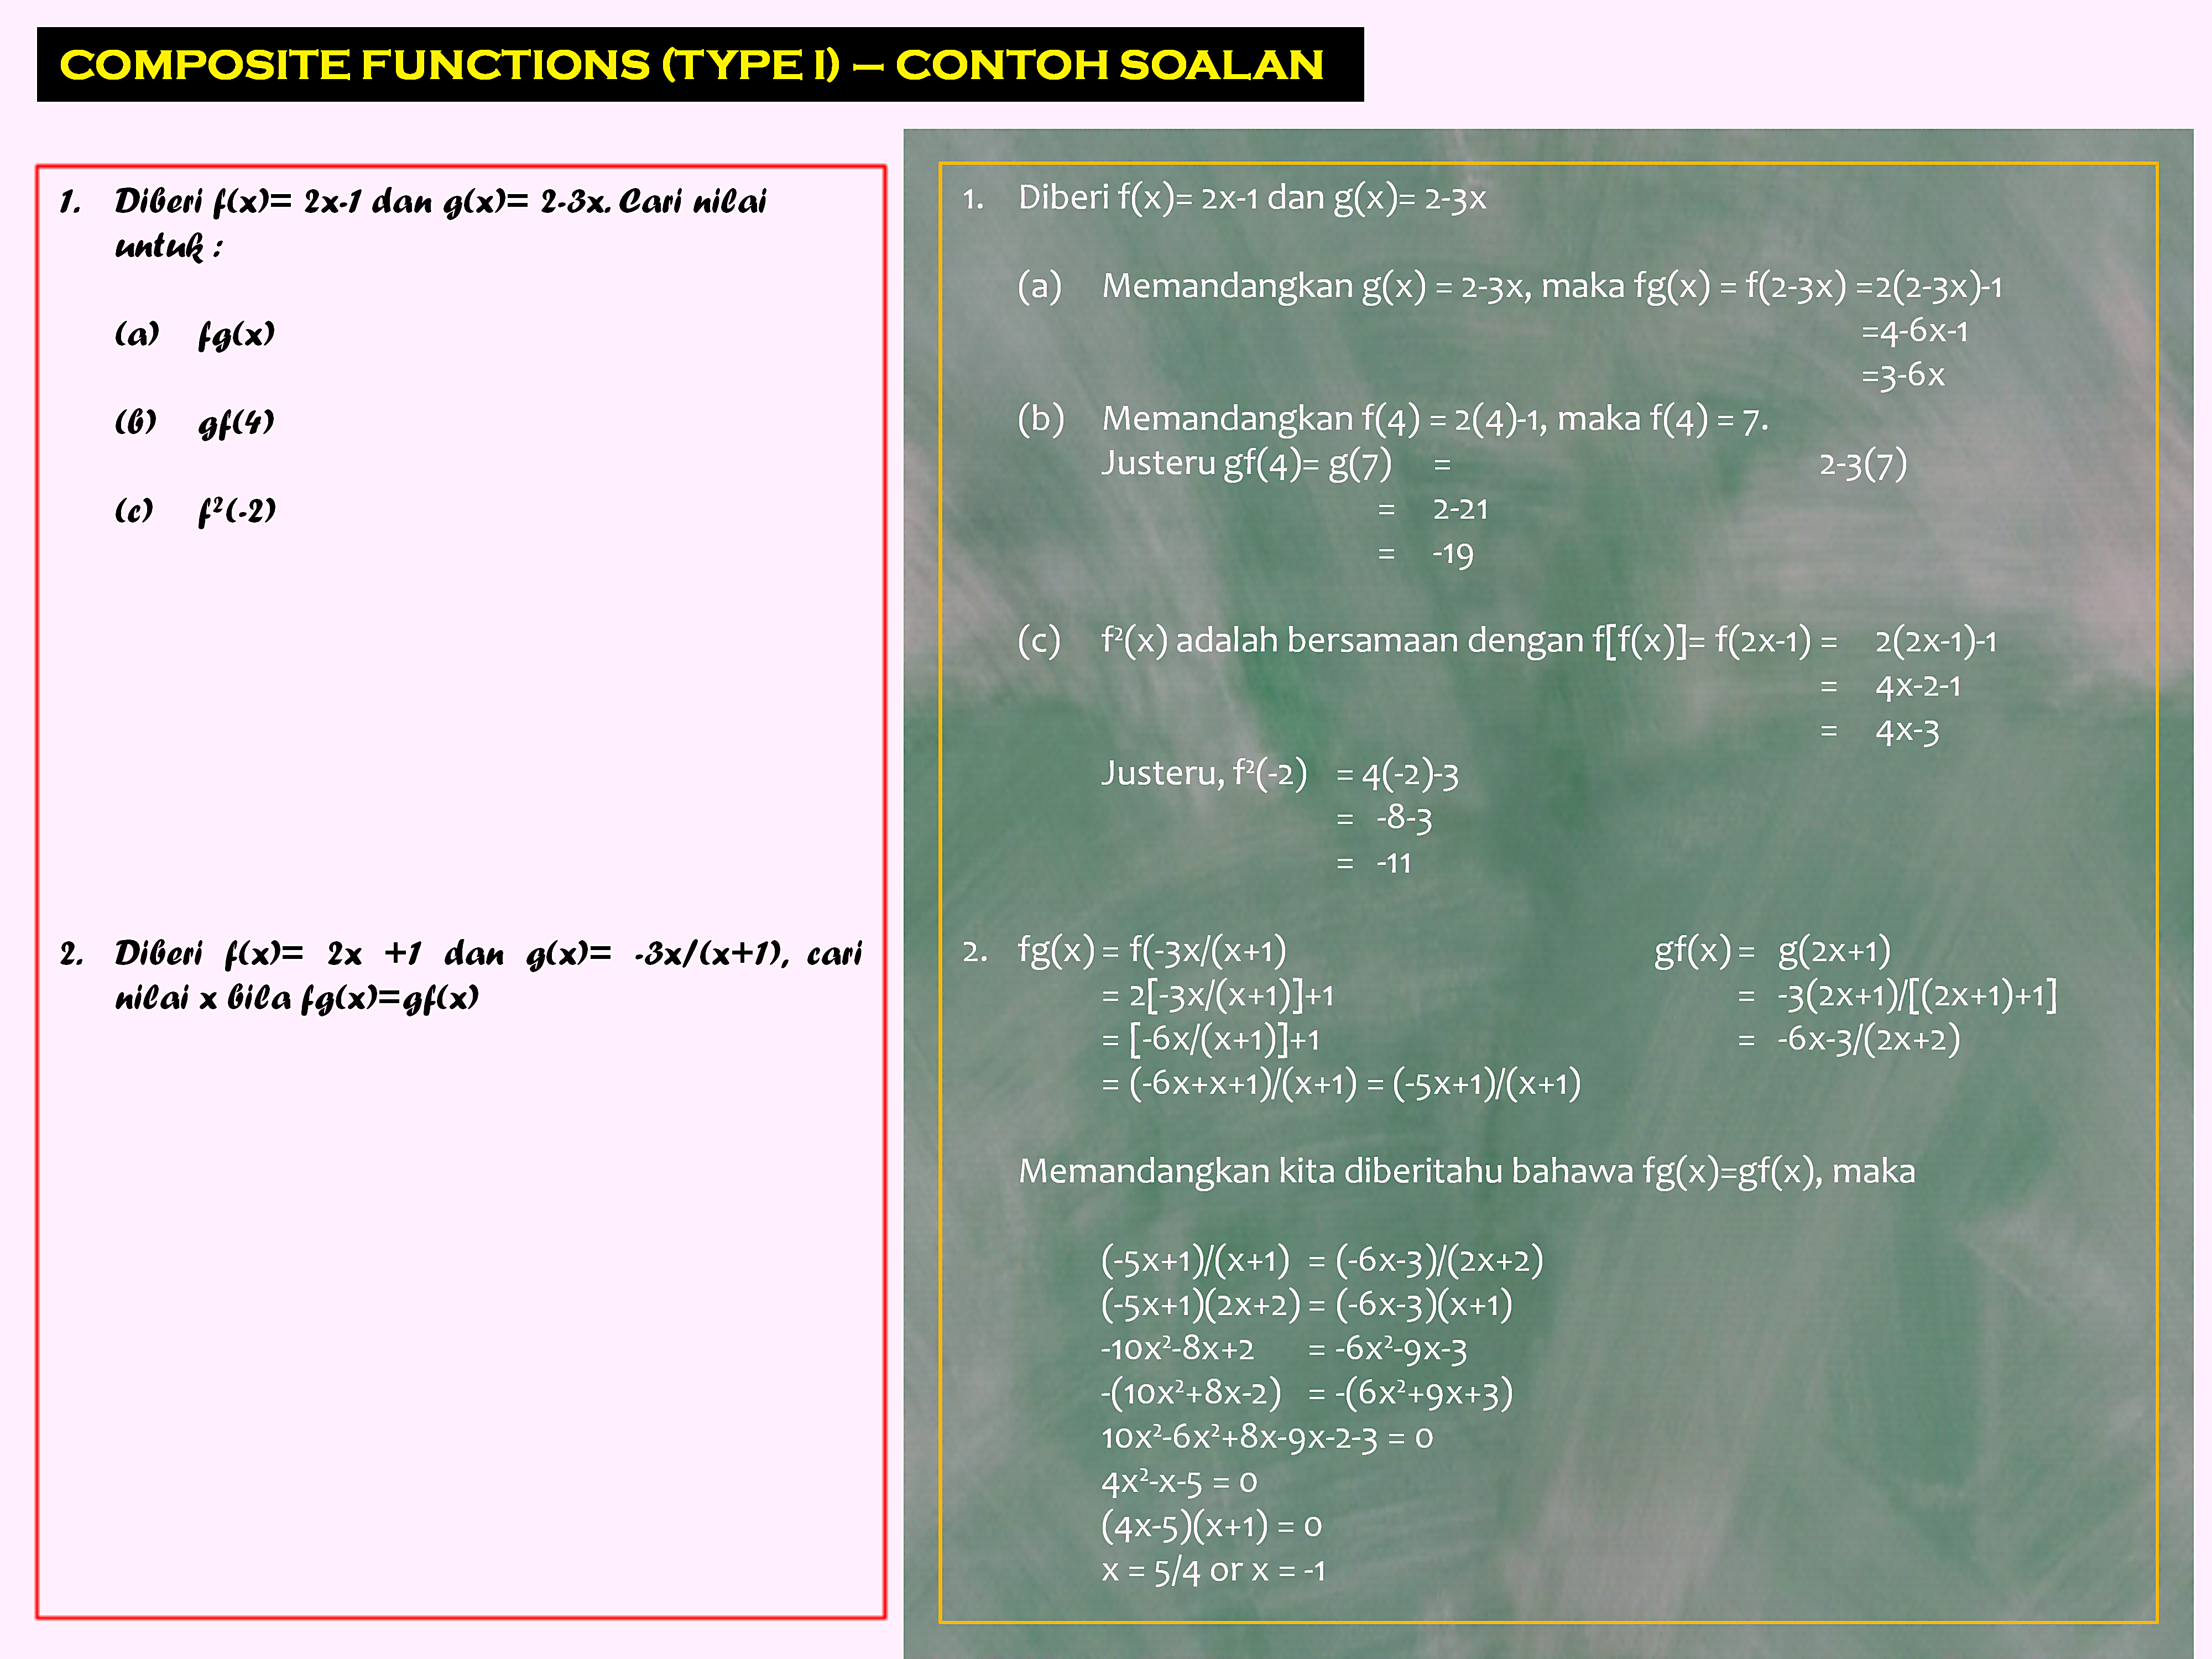 Contoh Soalan Add Math Function - Her Contoh